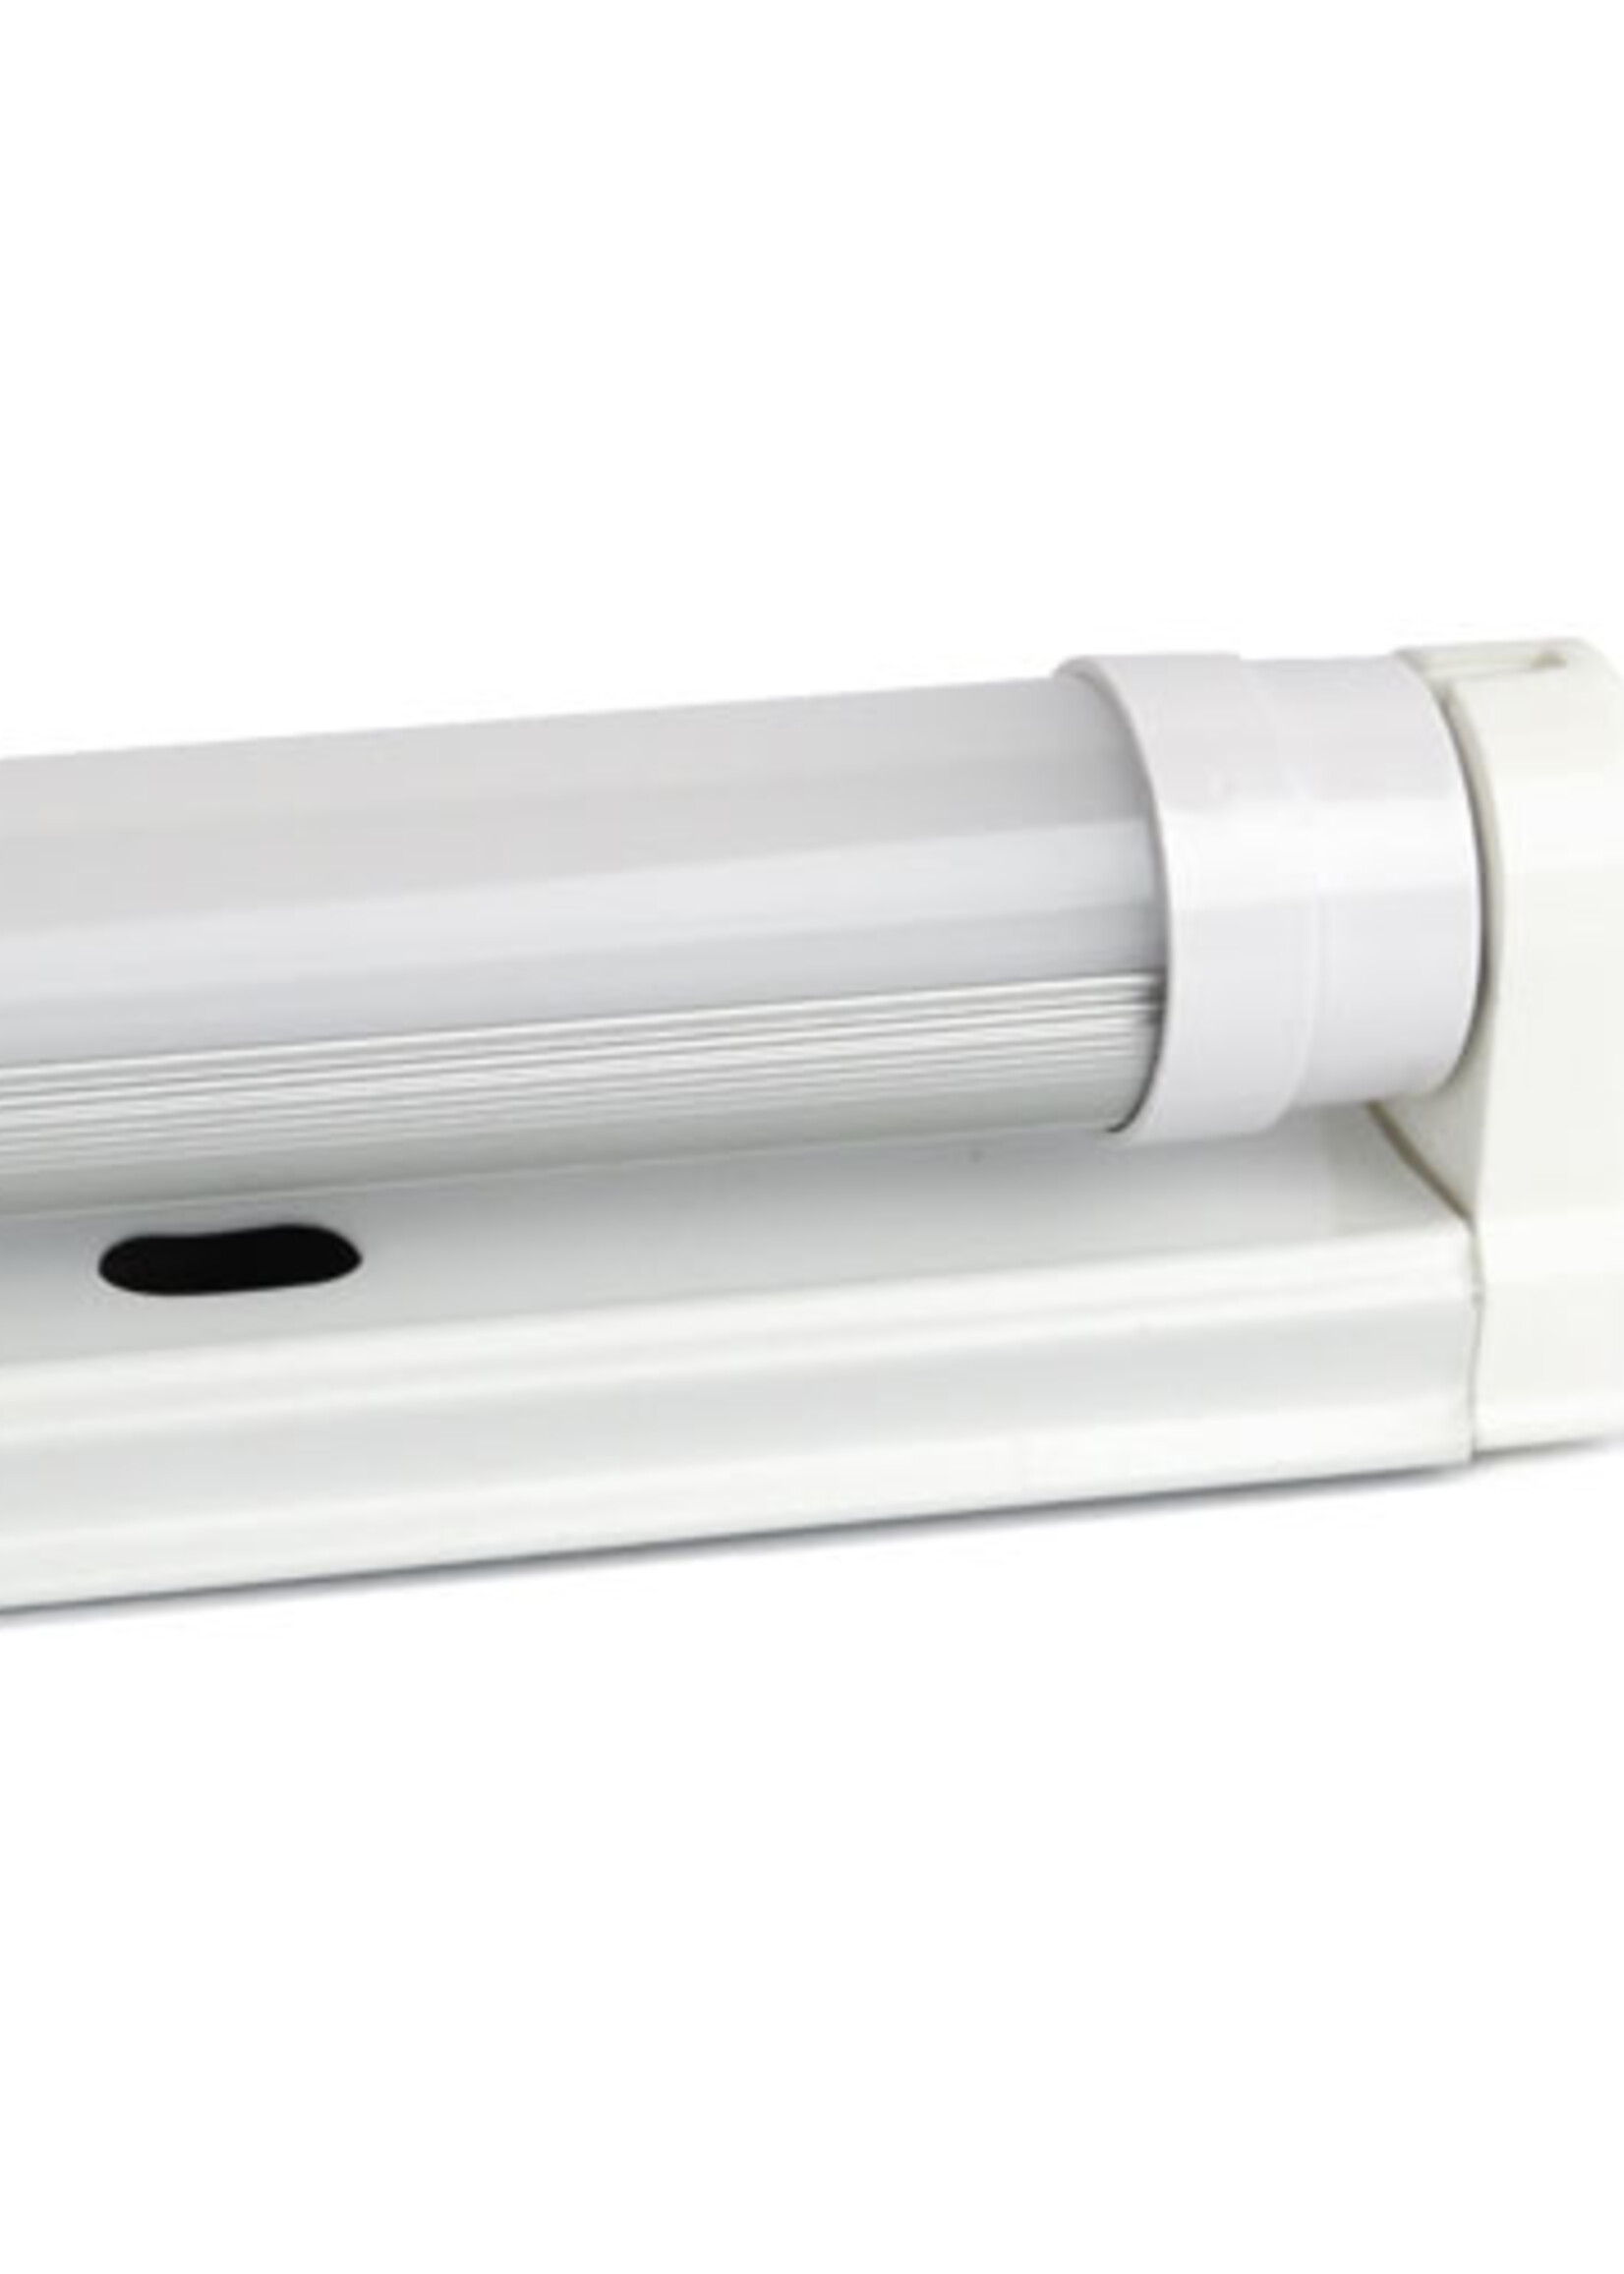 LEDWINKEL-Online LED TL Buis 60cm 9W 120lm/W - High lumen